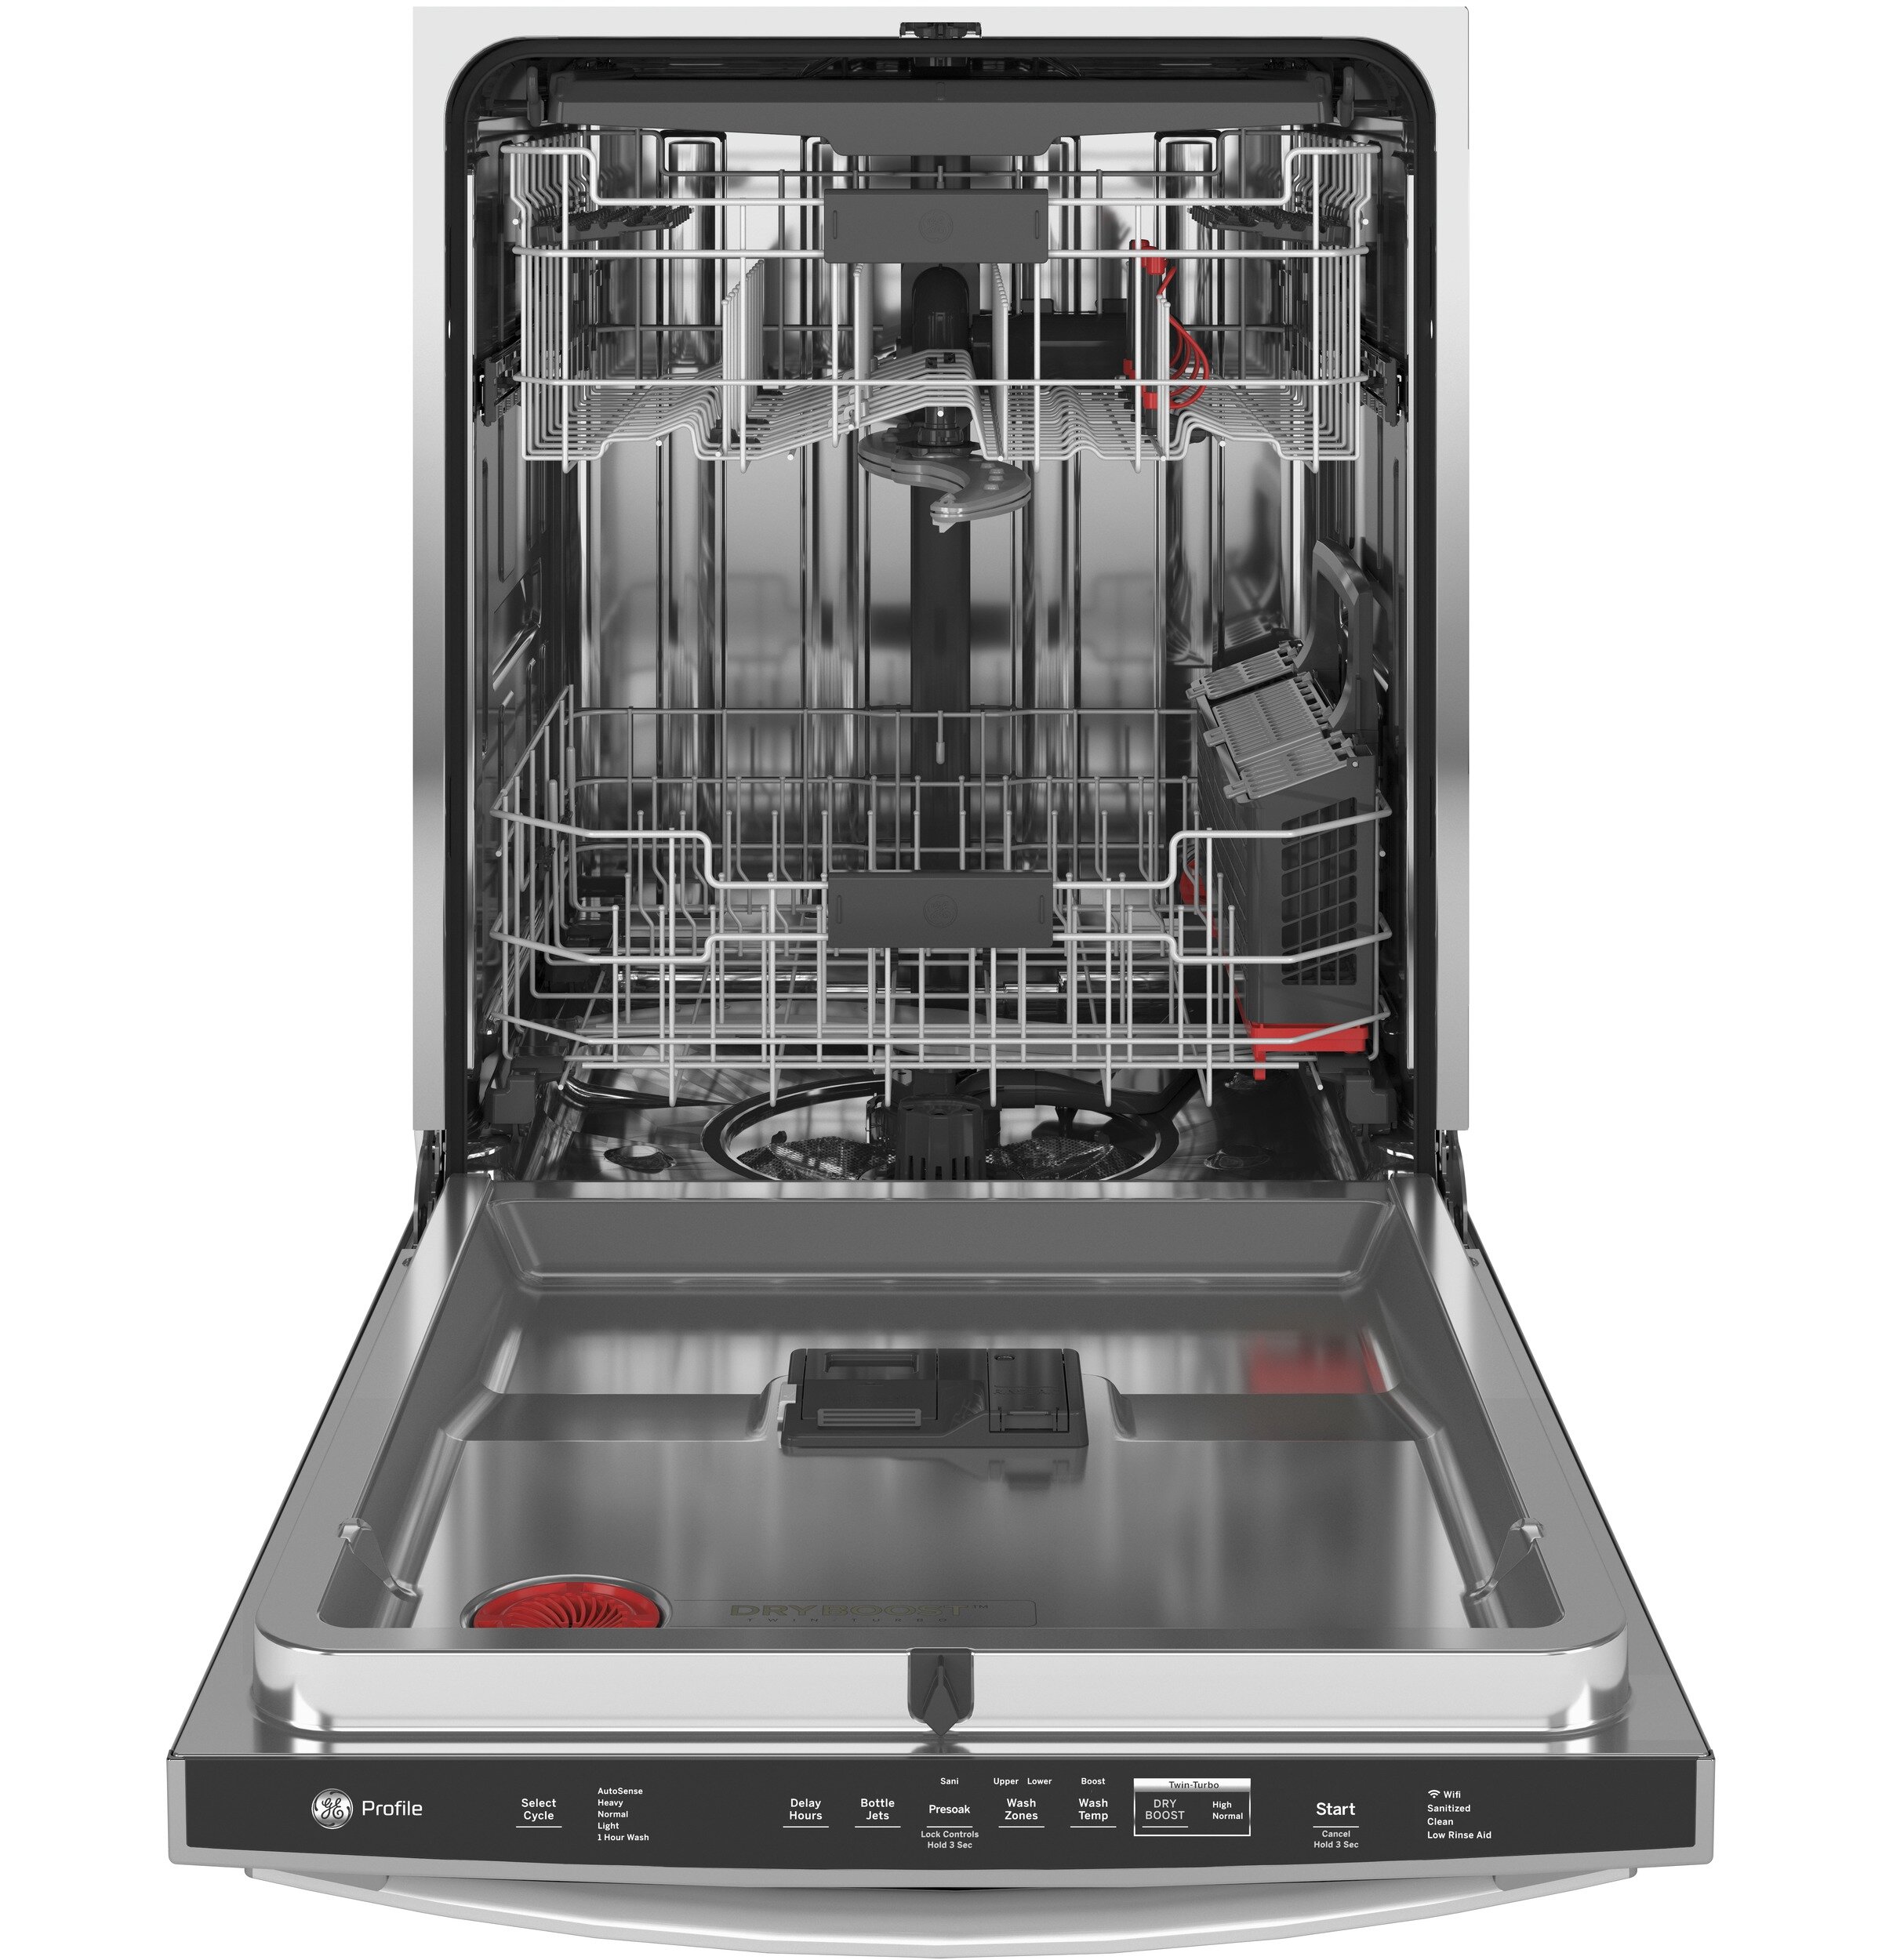 ge profile dishwasher not getting water